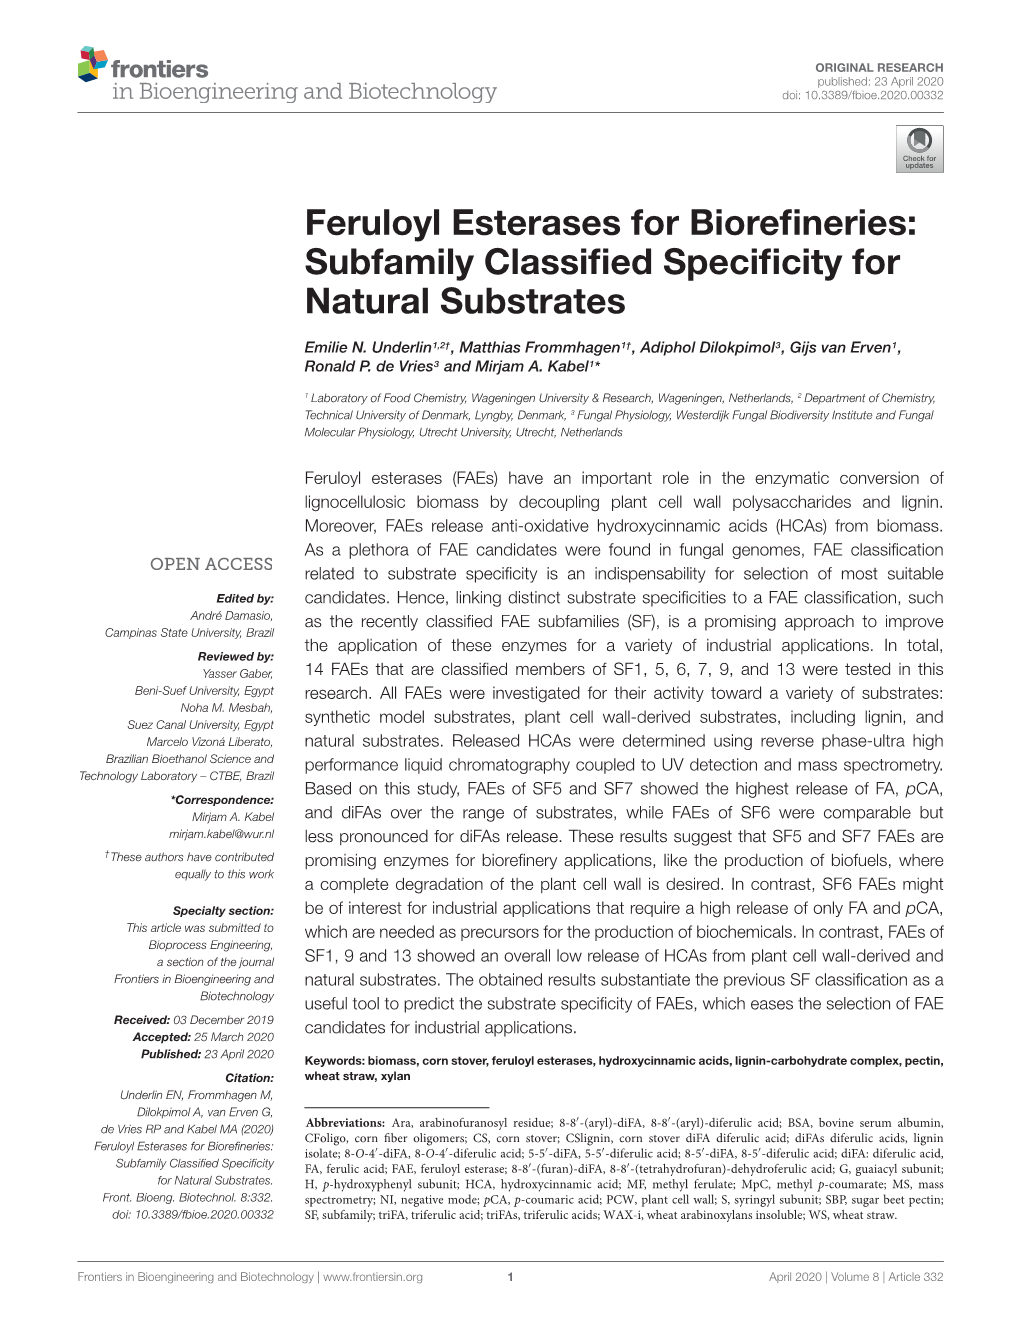 Feruloyl Esterases for Biorefineries